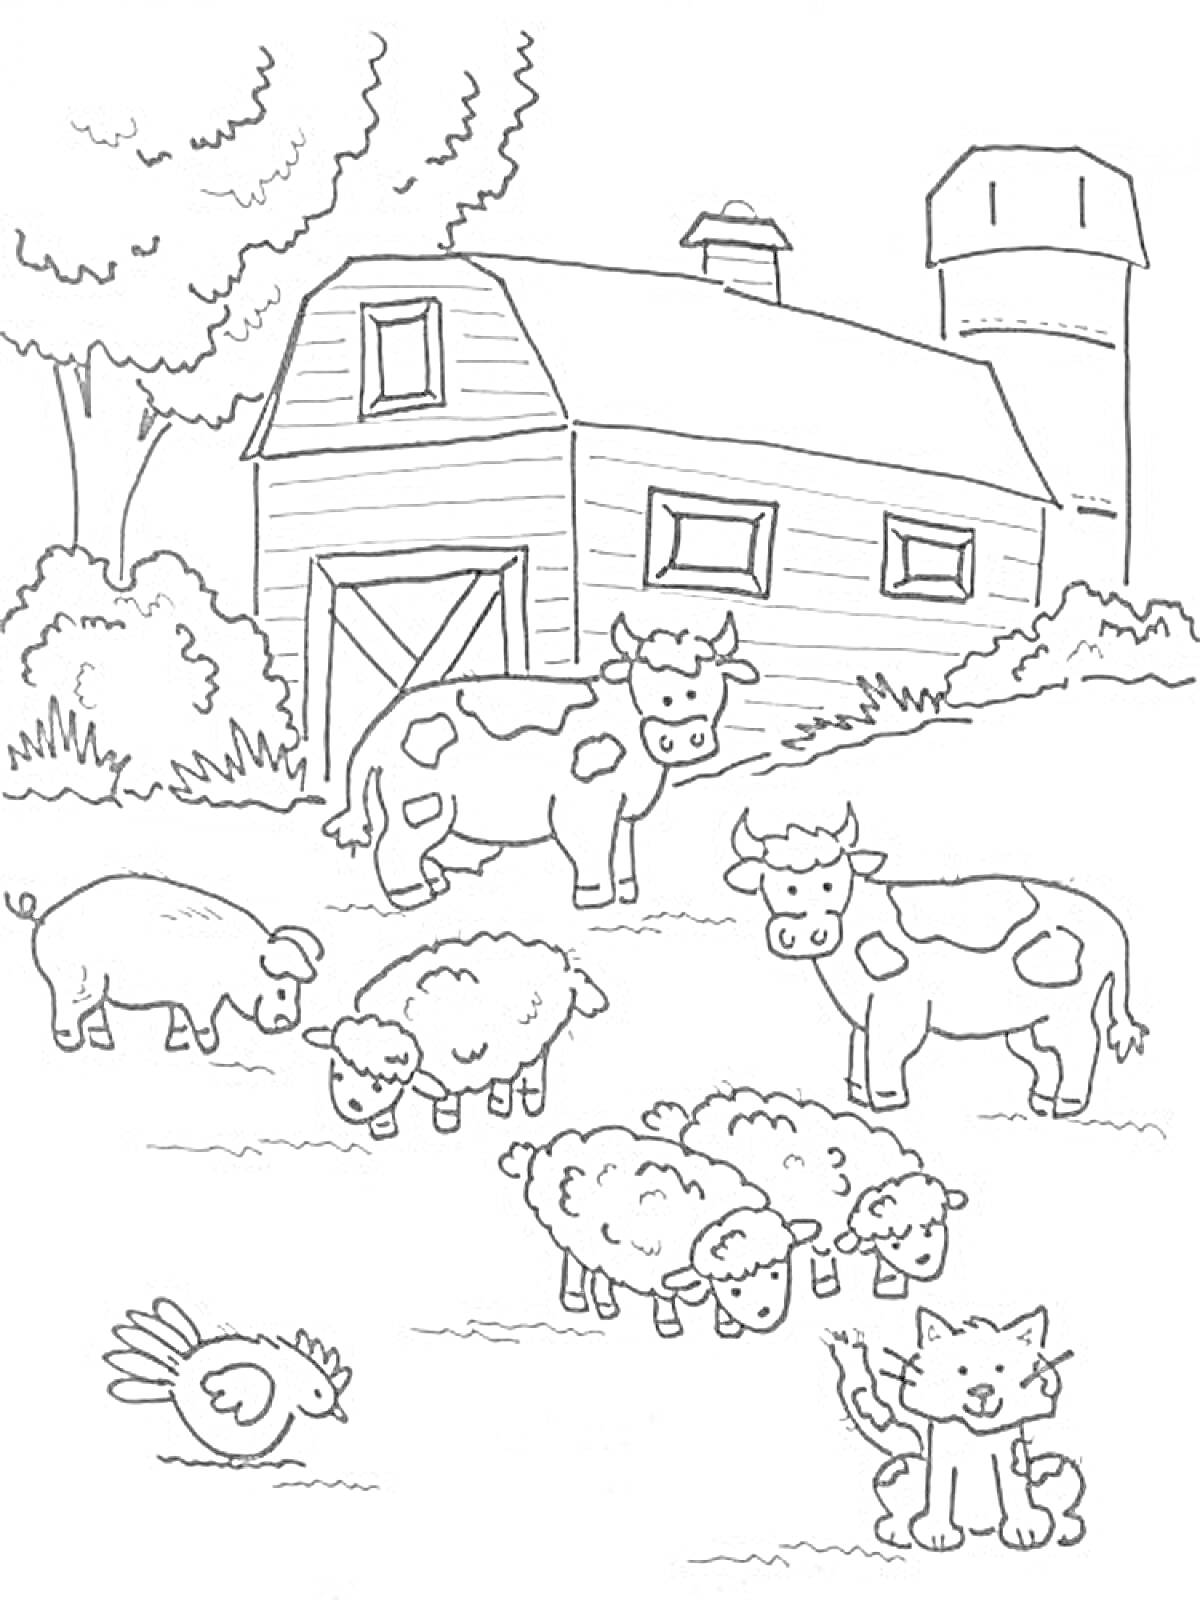 Раскраска Ферма с амбаром, коровами, овцами, поросёнком, курицей и котом